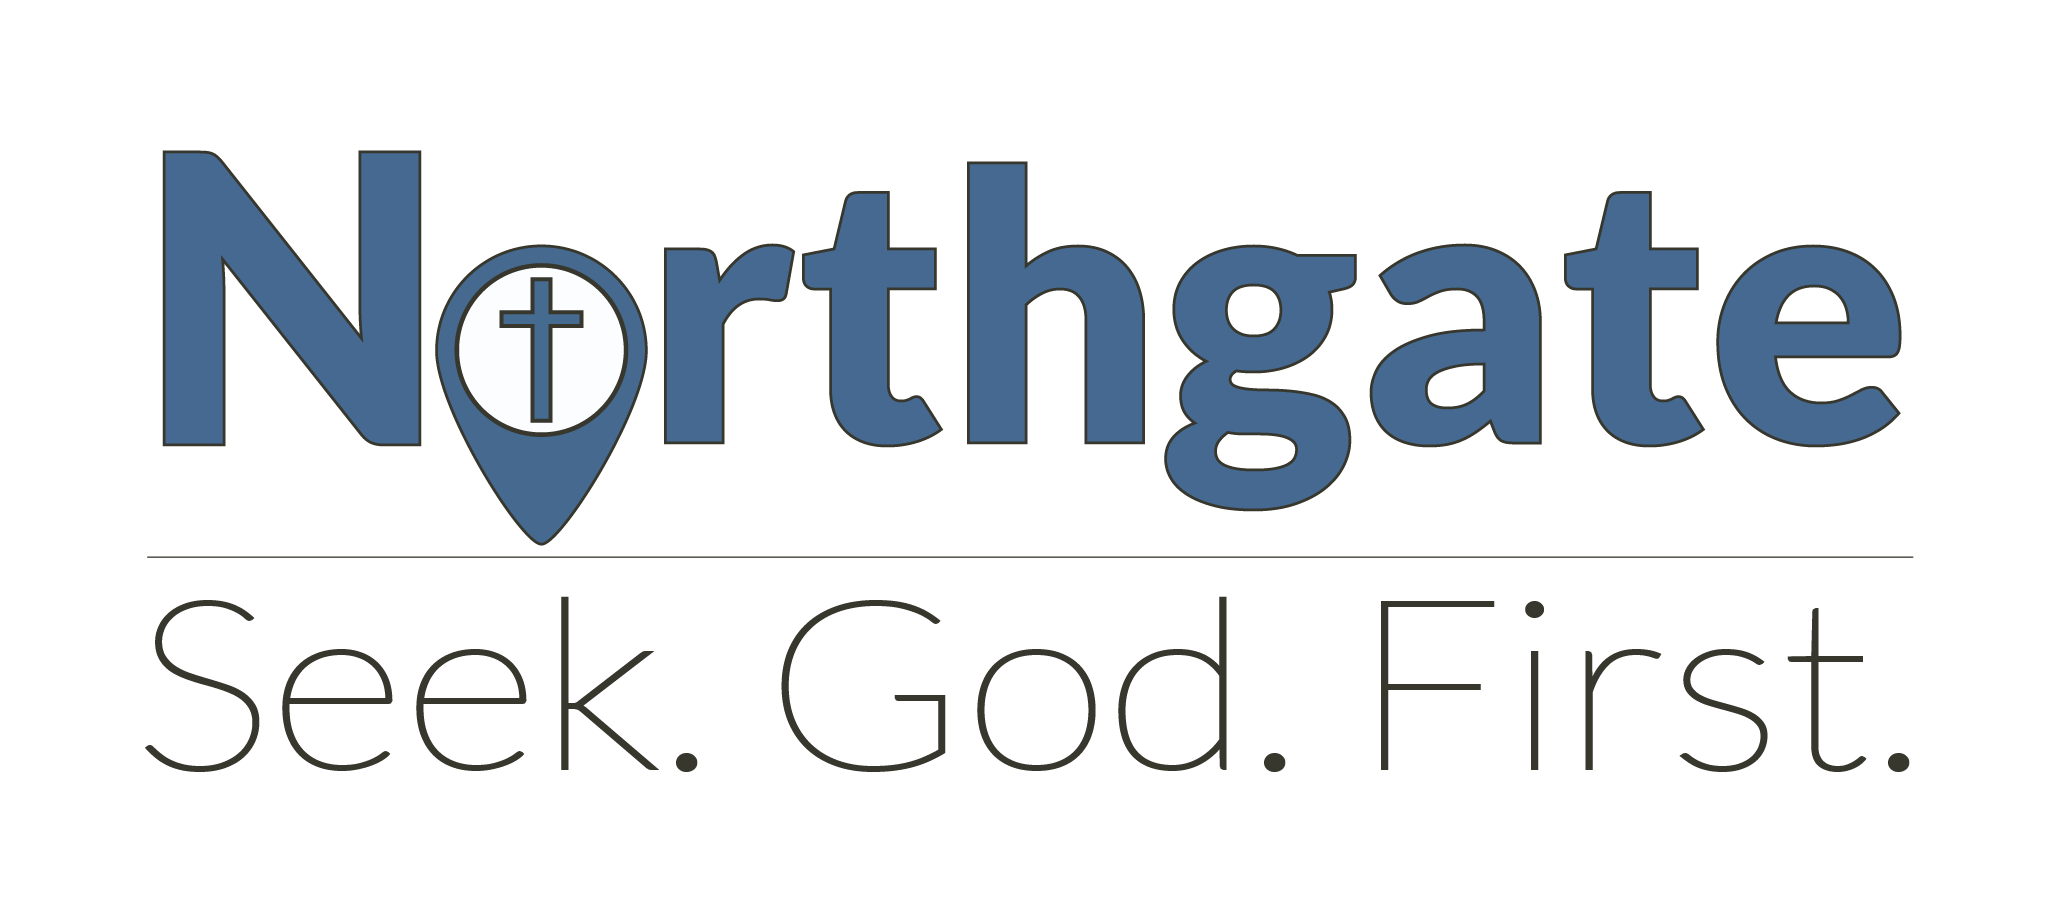 Northgate Logo - Northgate Baptist – Seek First the Kingdom of God – Matthew 6:33